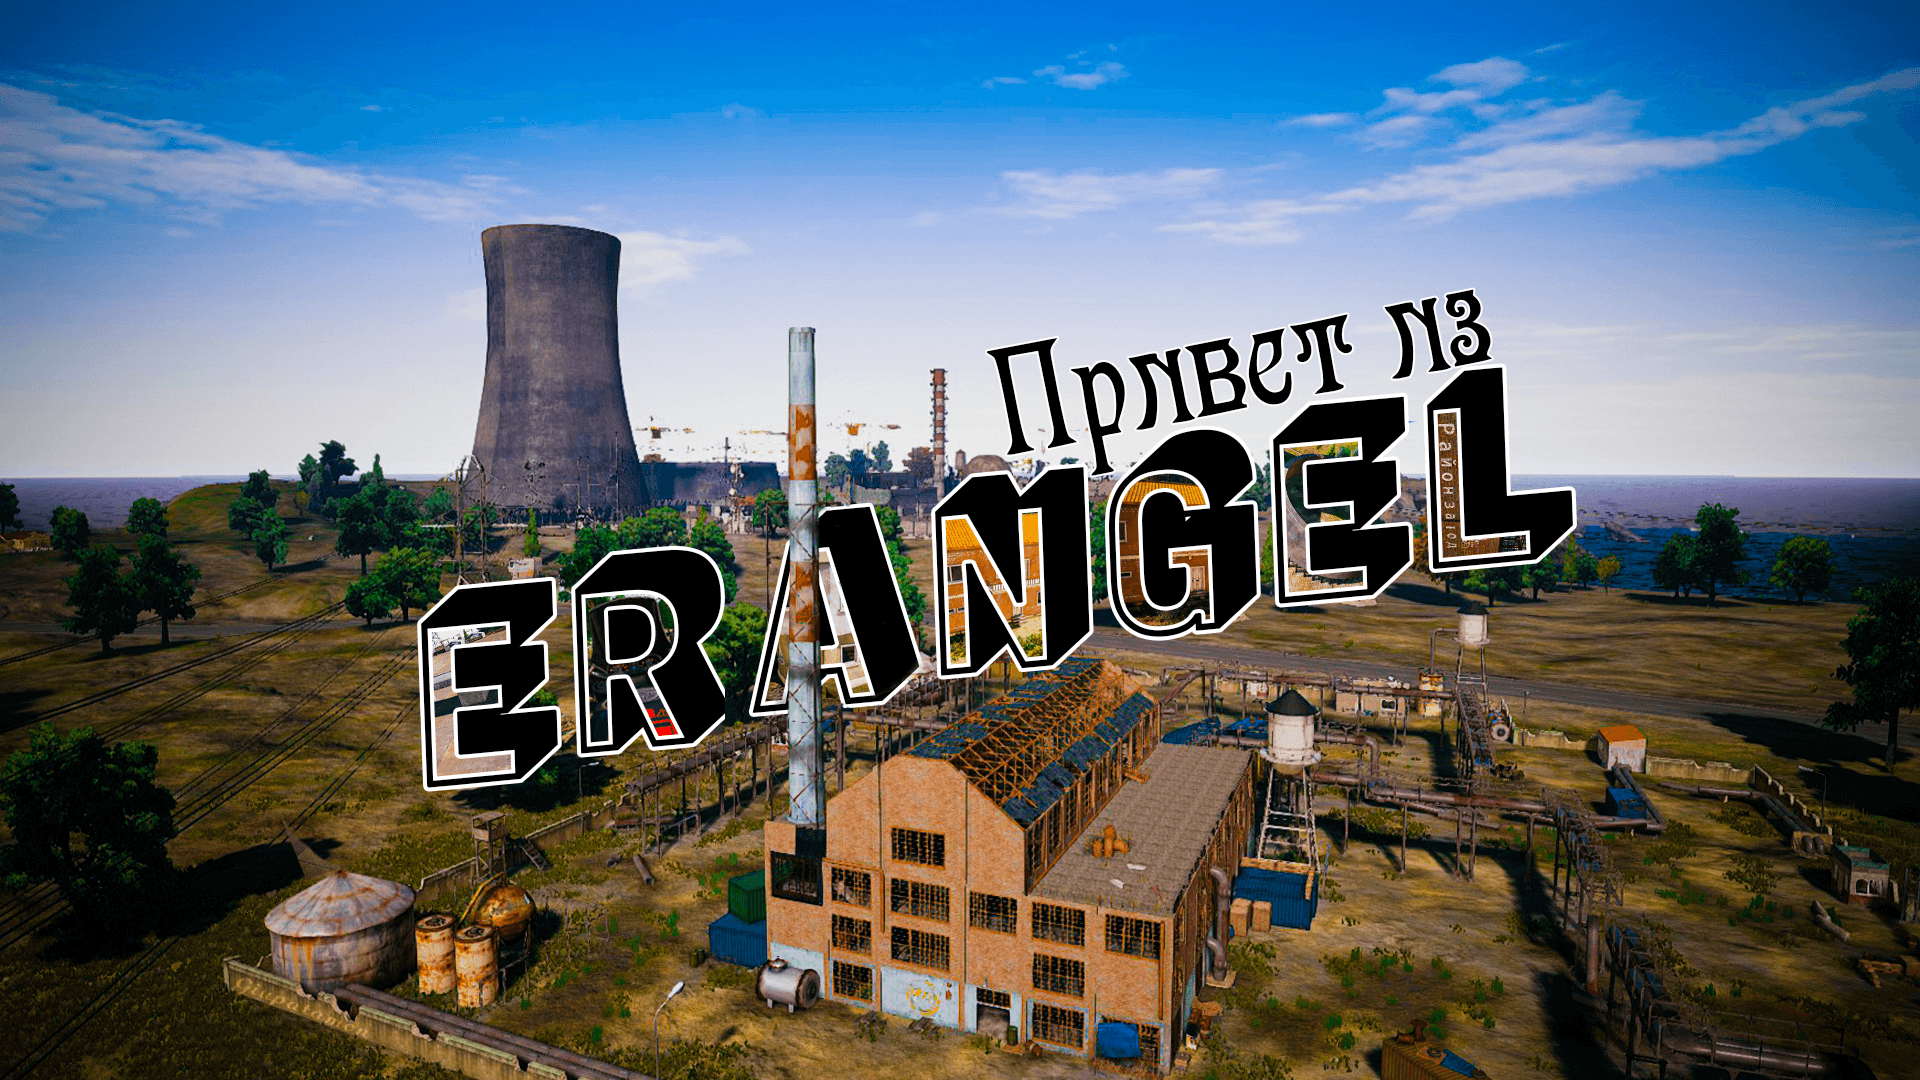 I made a postcard for Erangel! Stole the idea from /u